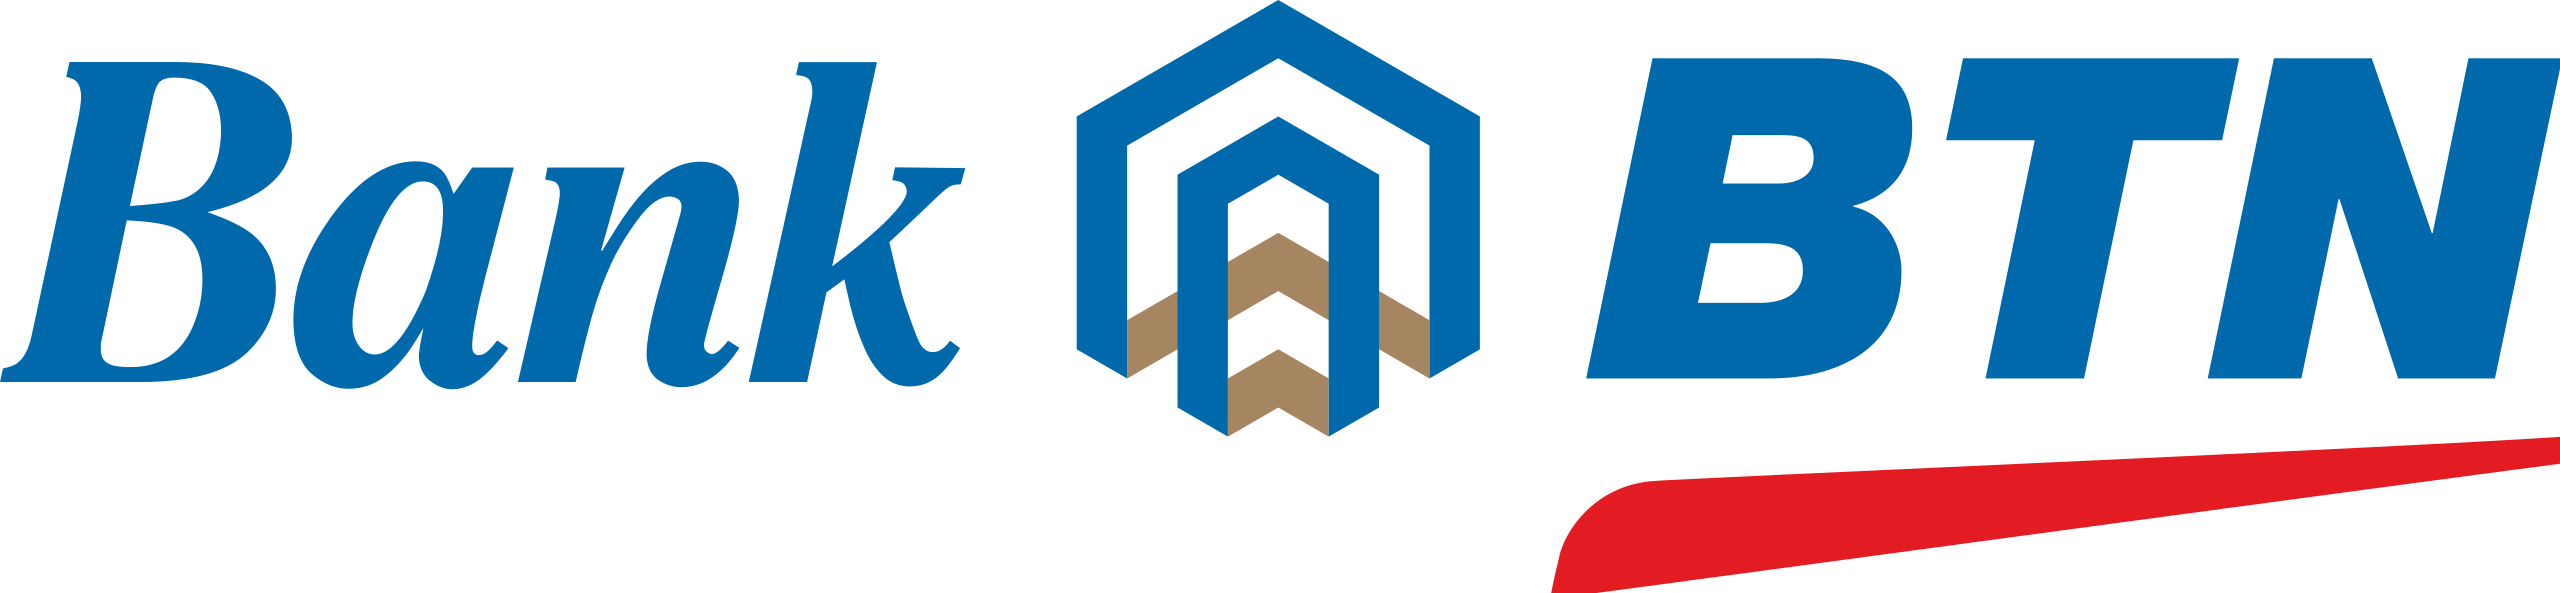 Bank Tabungan Negara logo